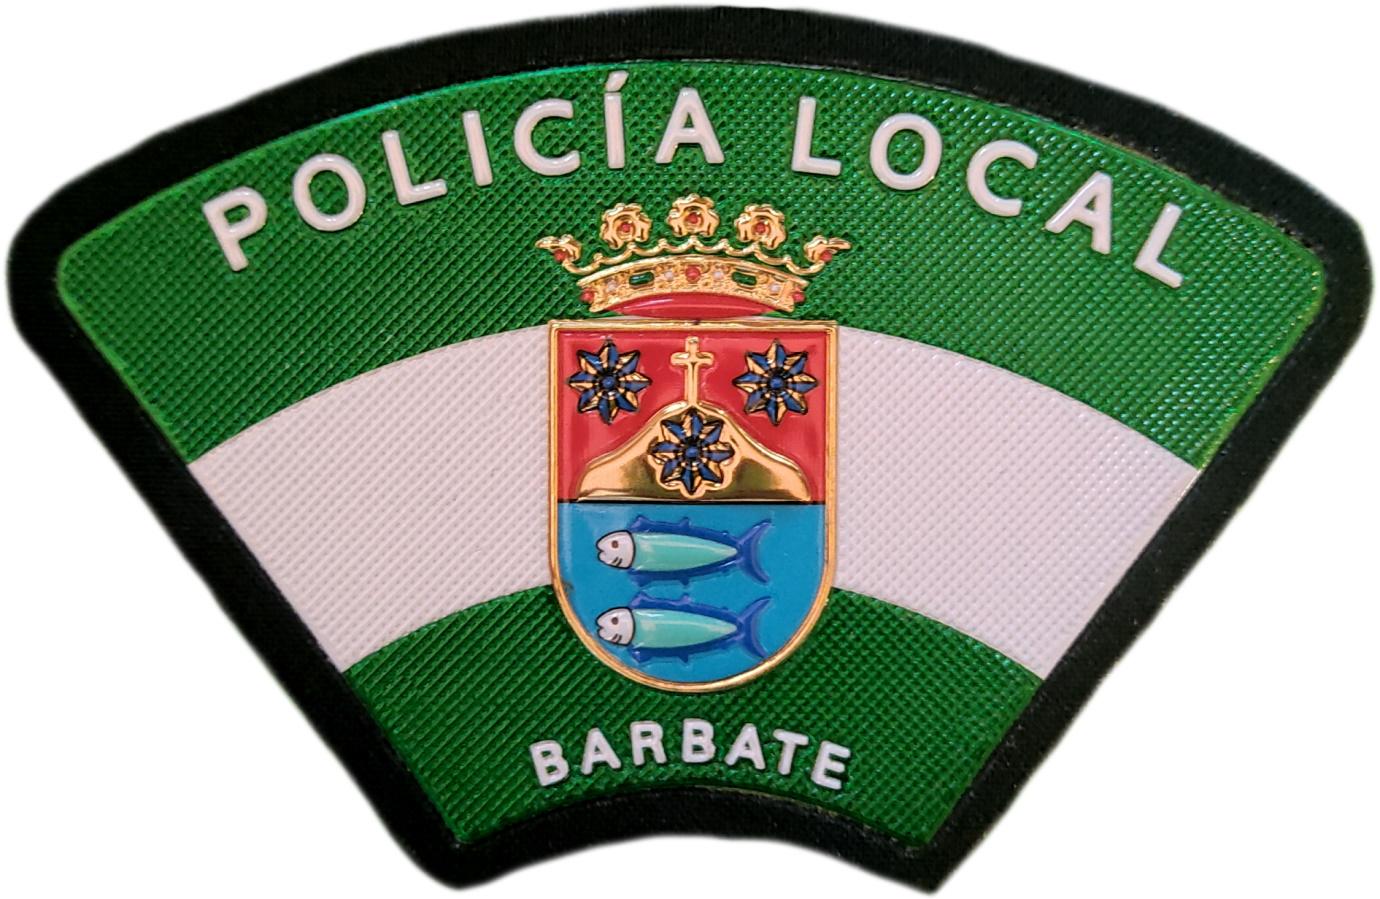 Policía Local Barbate Cádiz parche insignia emblema distintivo